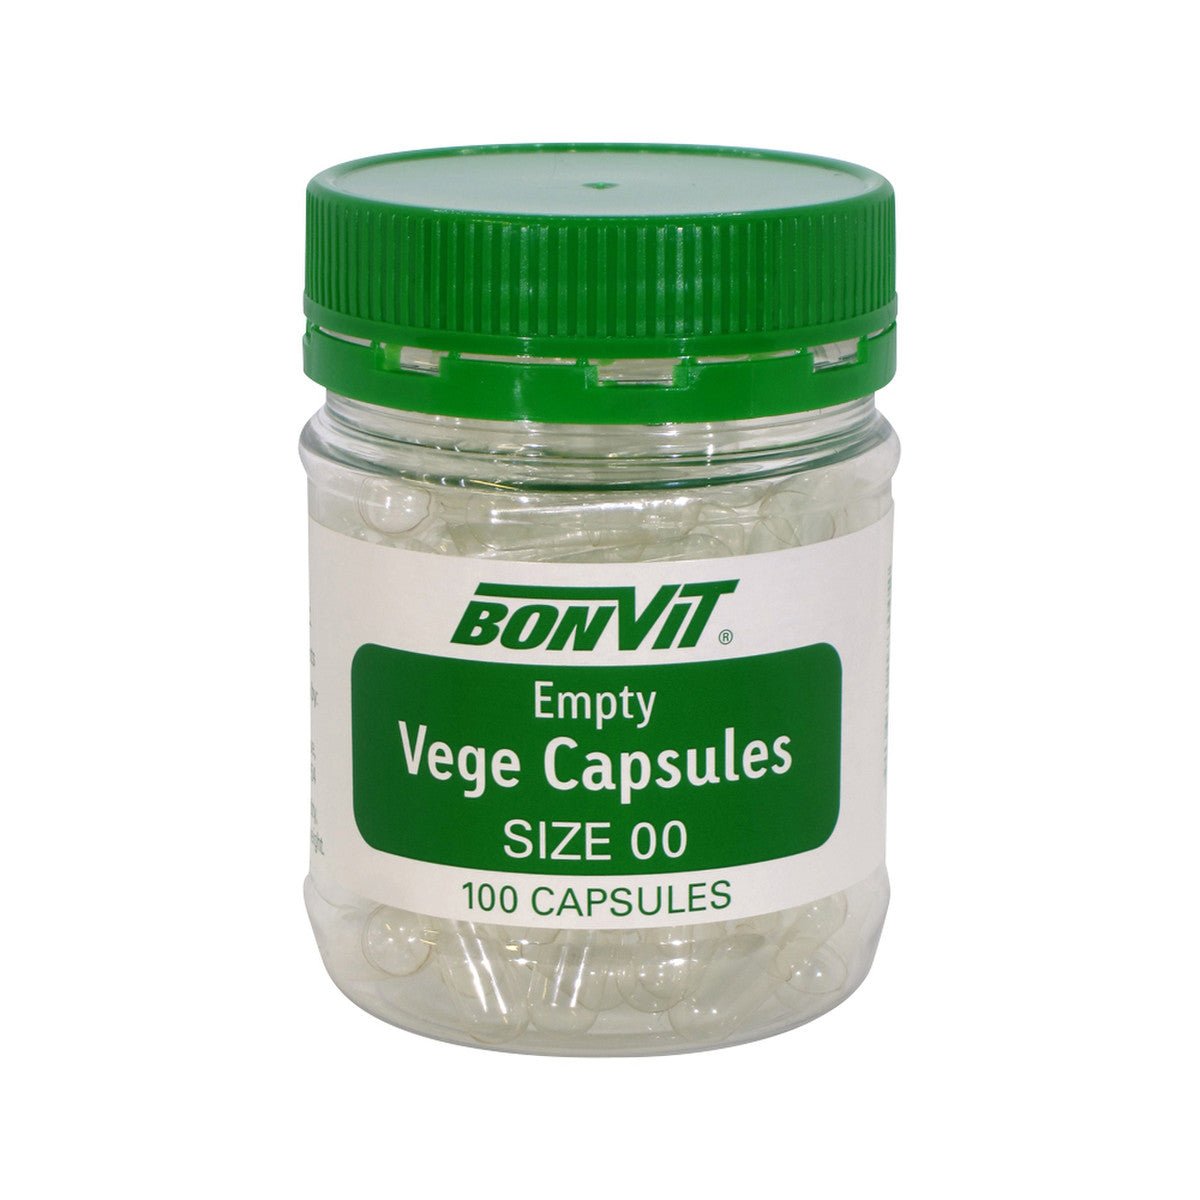 Bonvit - Empty Vege Capsules Size '00'